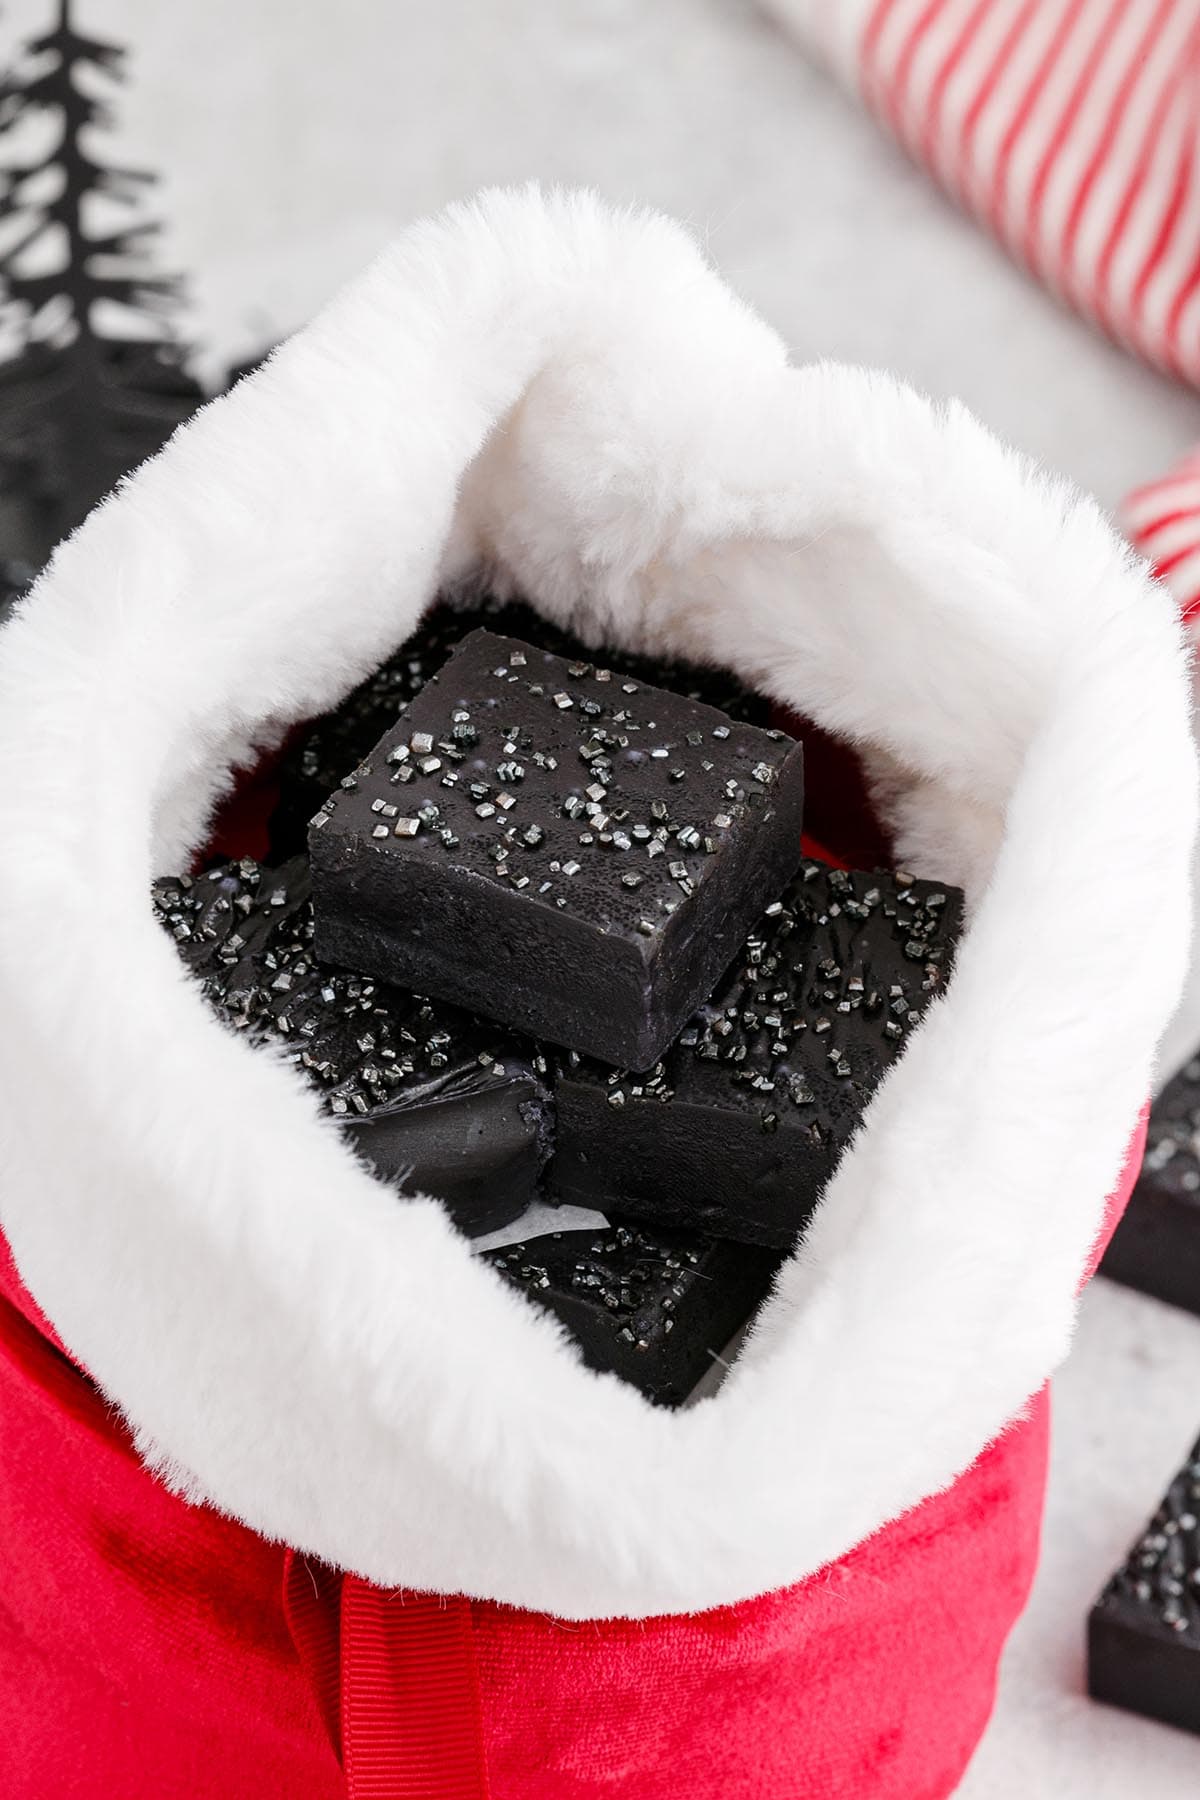 Christmas Coal Fudge inside Santa's bag